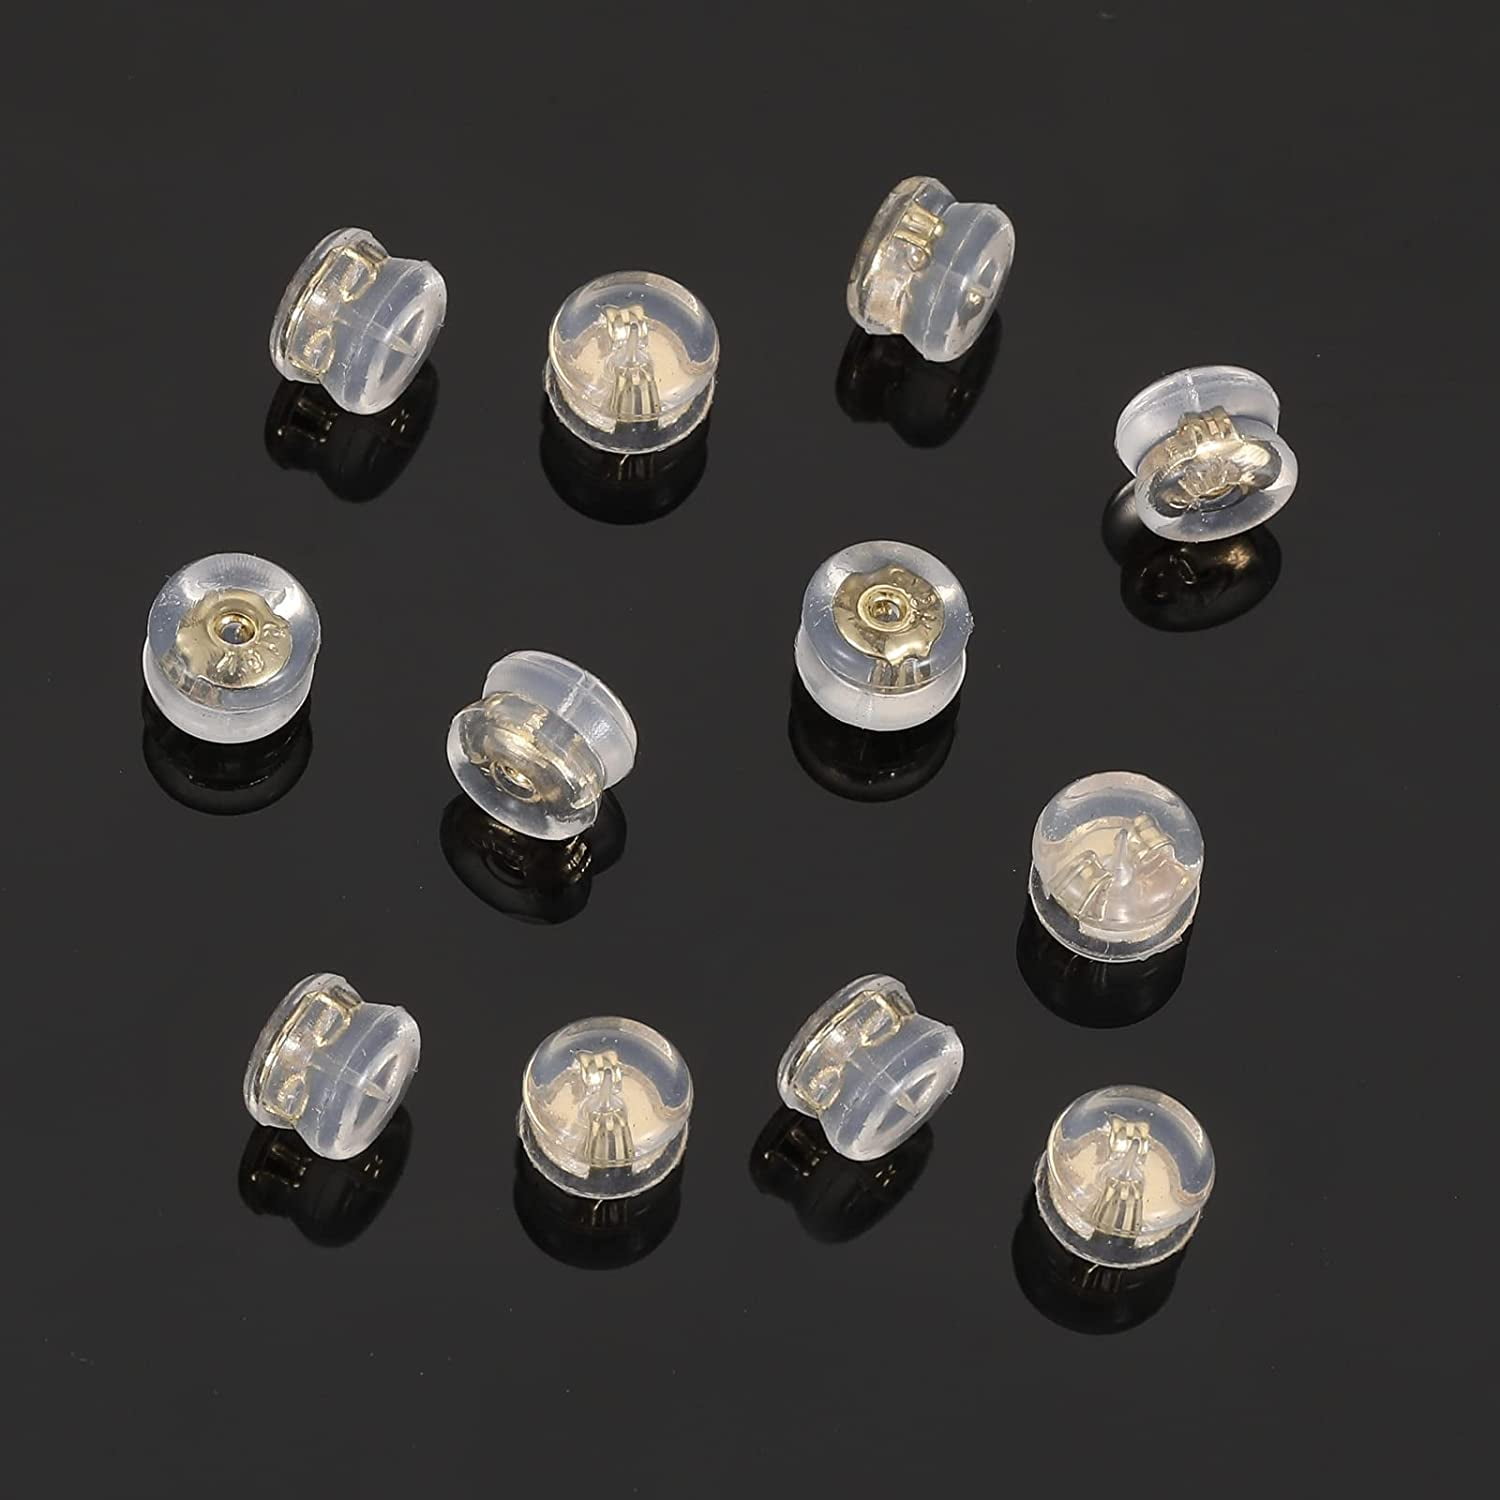 MMQ mmq silicone earring backs for studs 600 pcs, clear earring